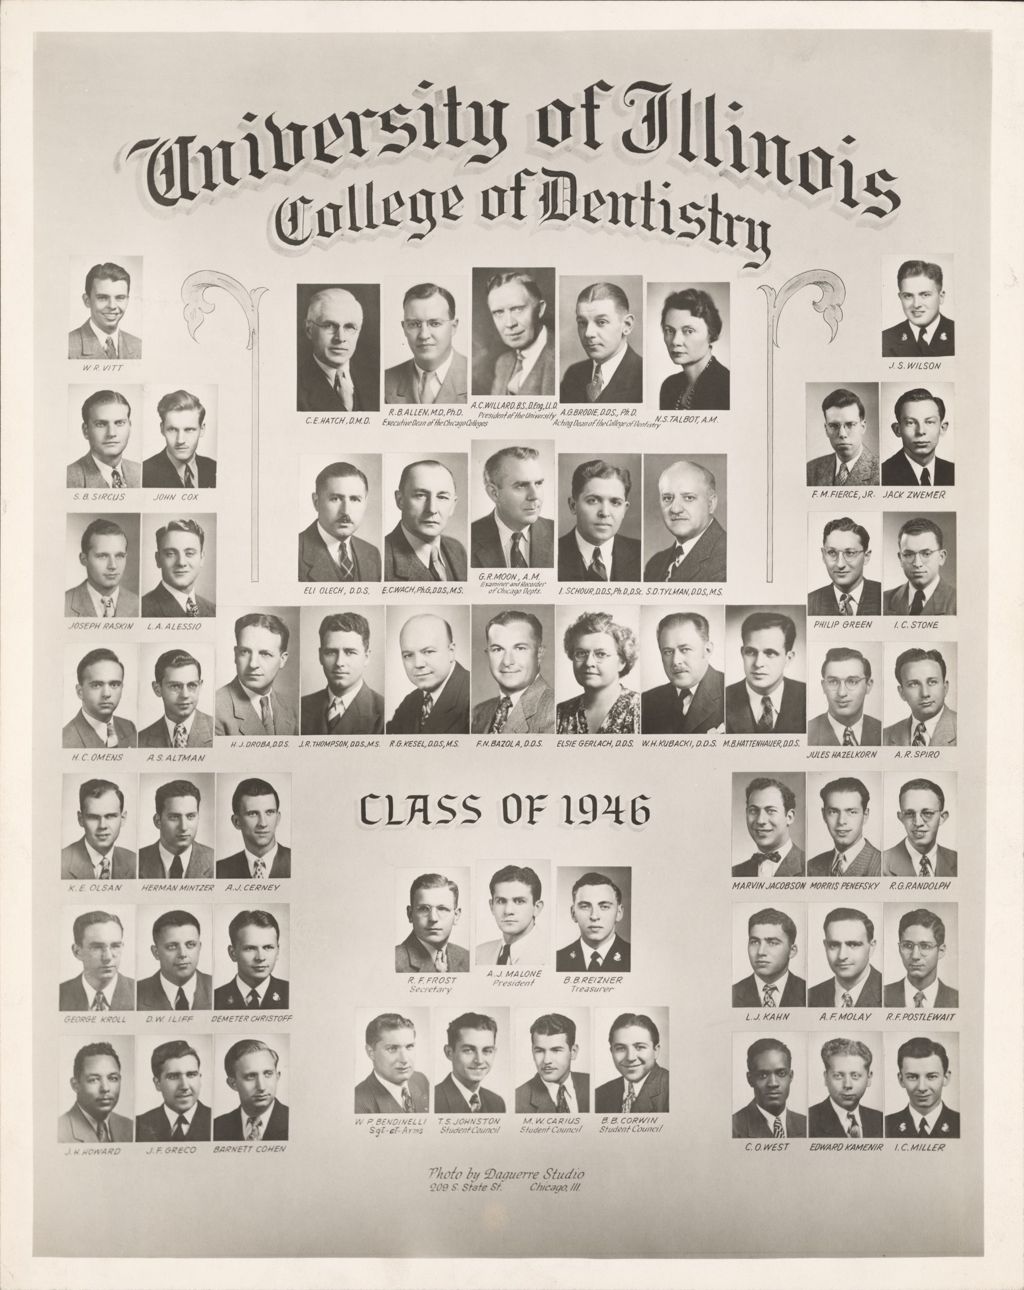 1946 graduating class, University of Illinois College of Dentistry